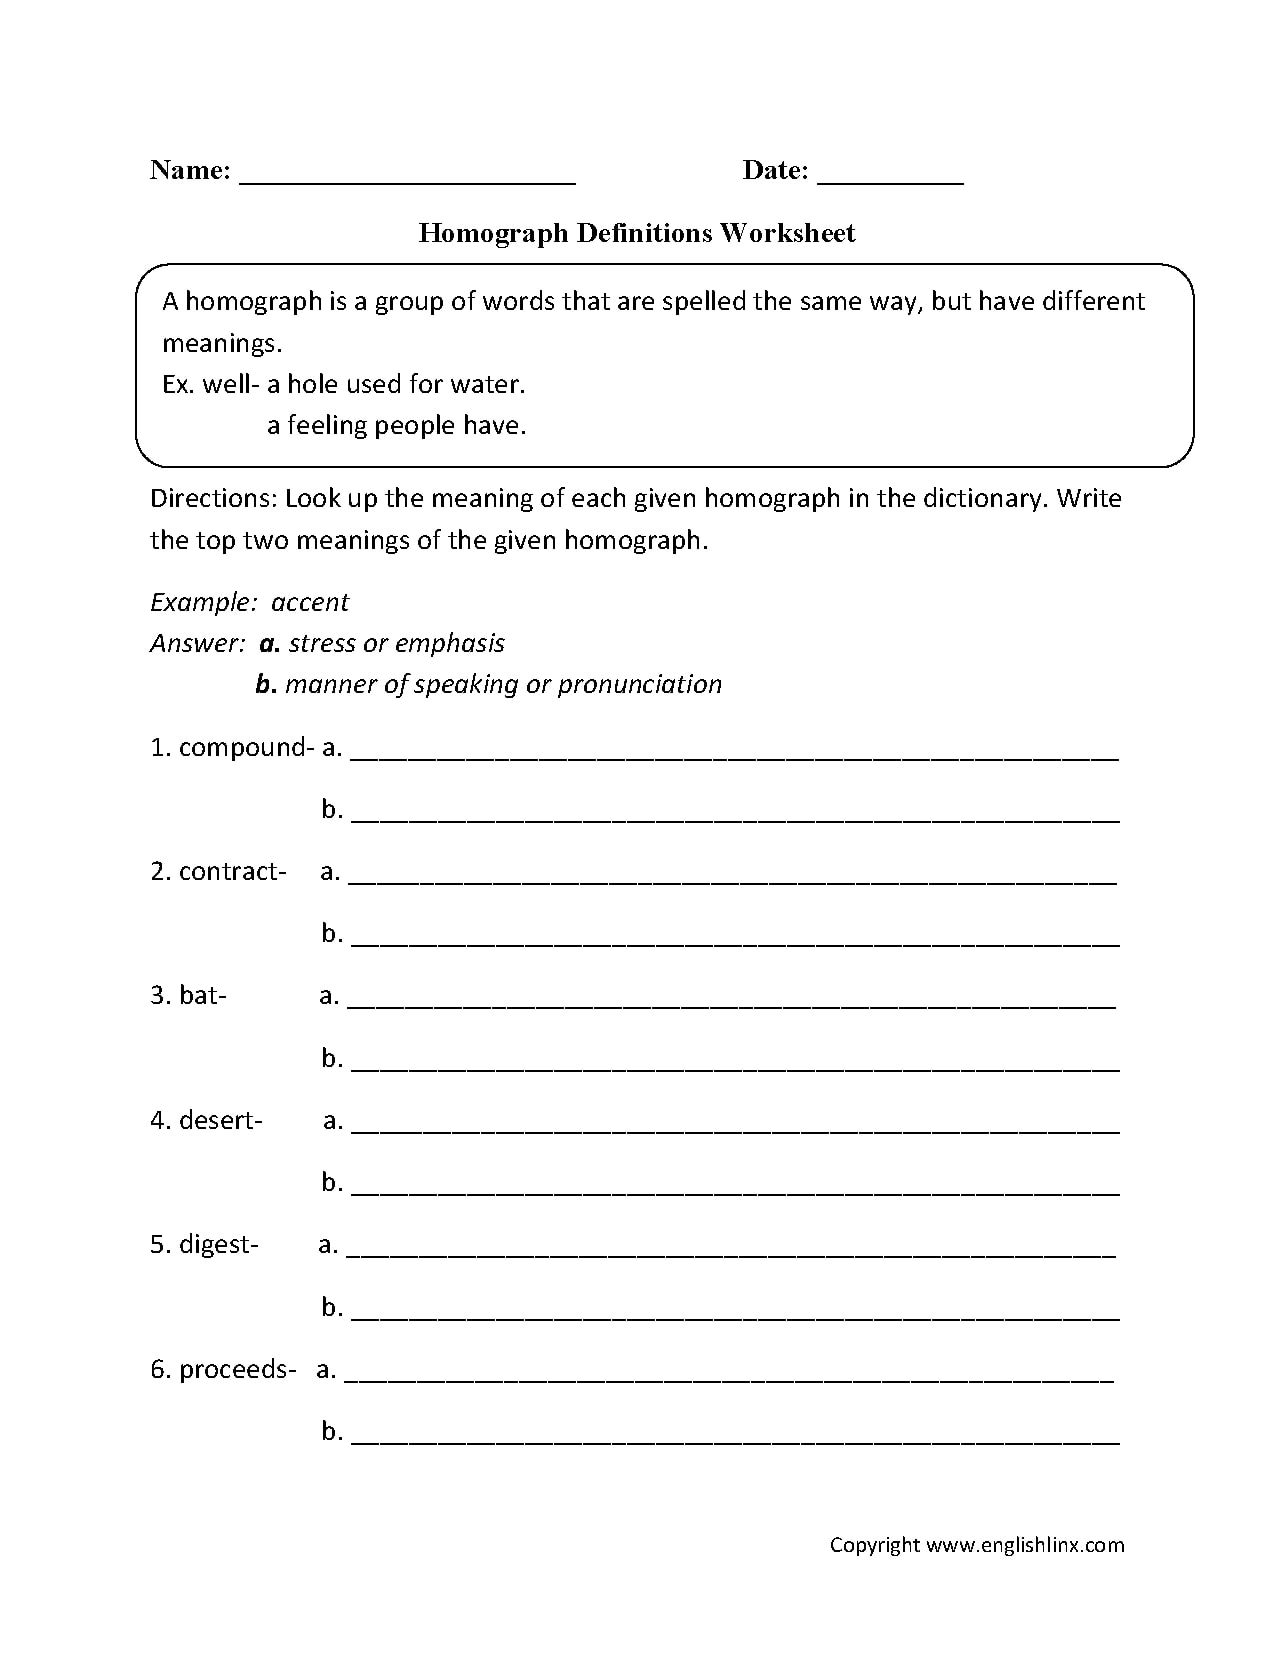 homograph definitions worksheet example